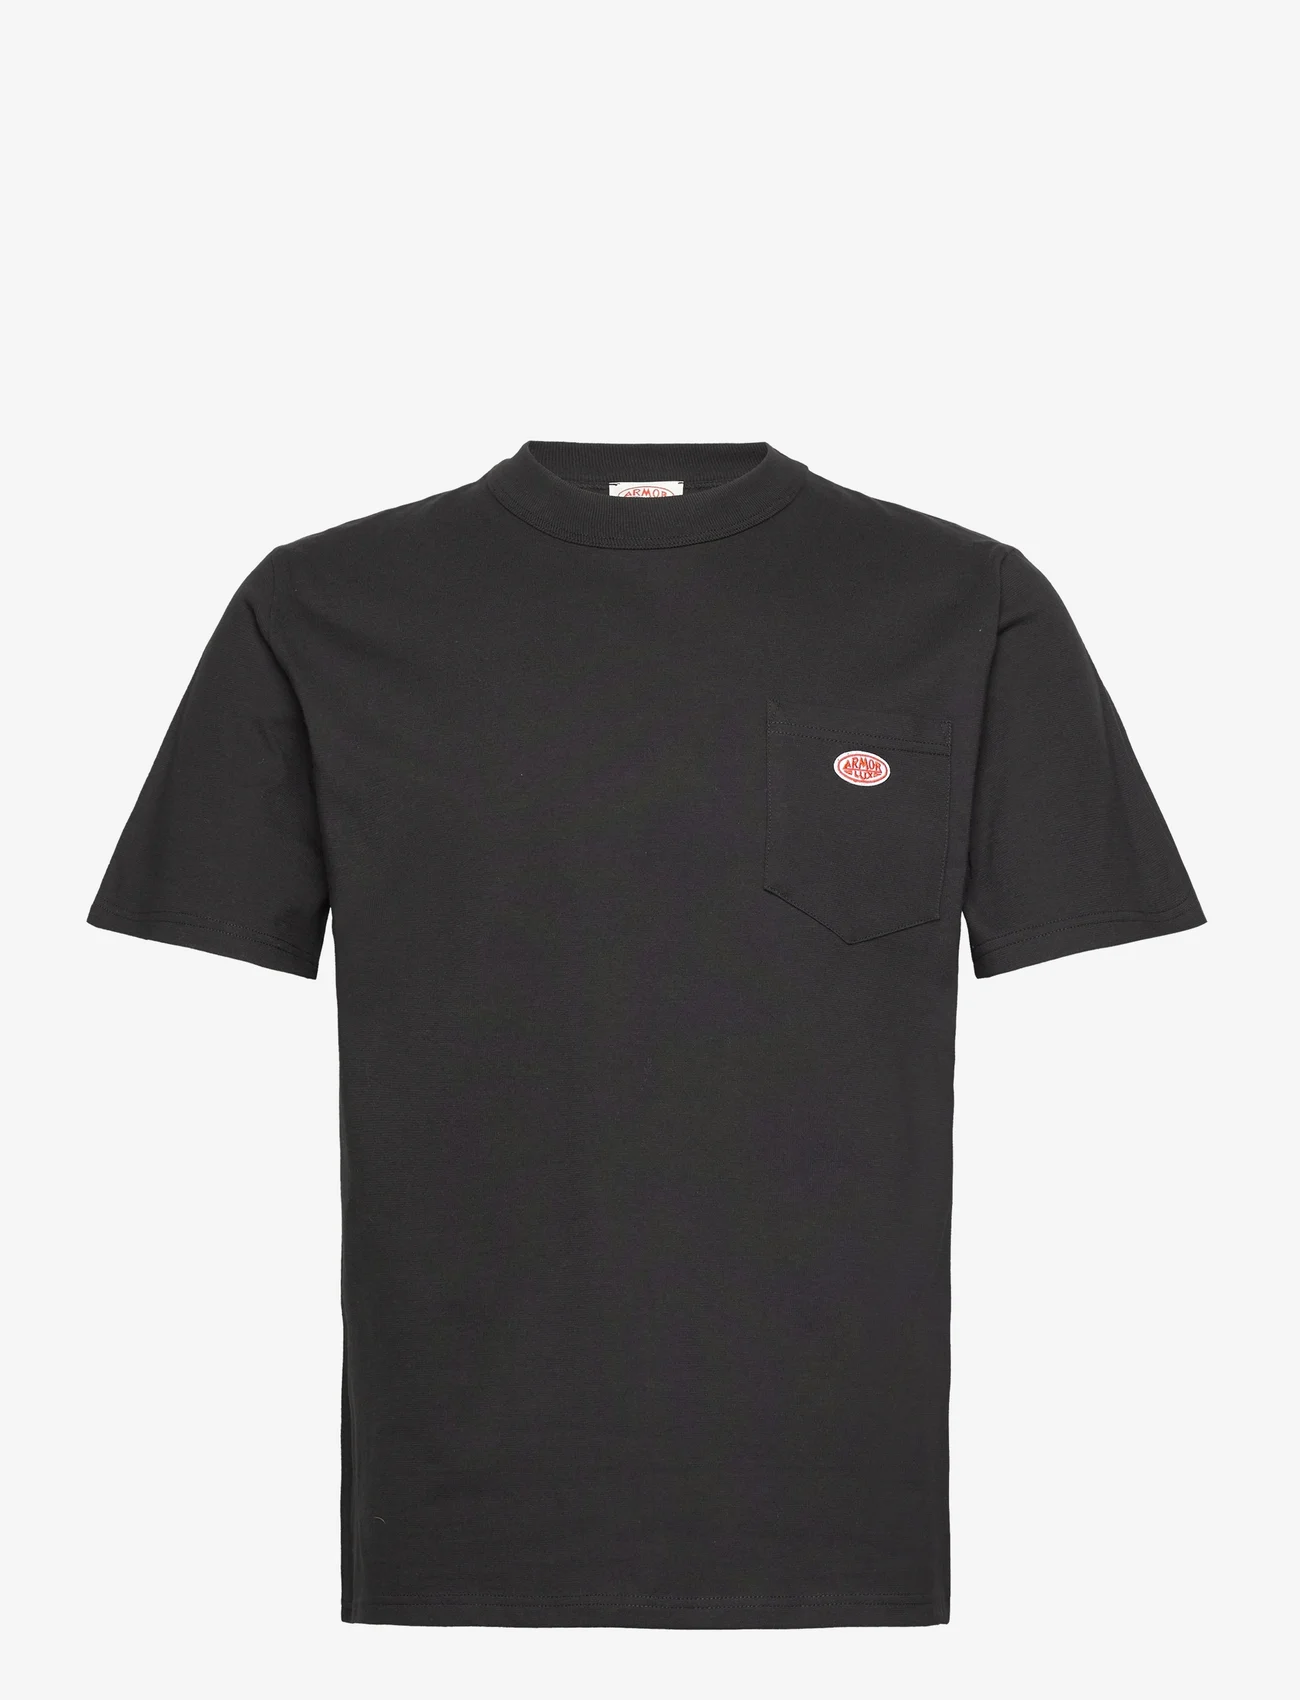 Armor Lux - Basic Pocket T-shirt Héritage - t-shirts - black - 0